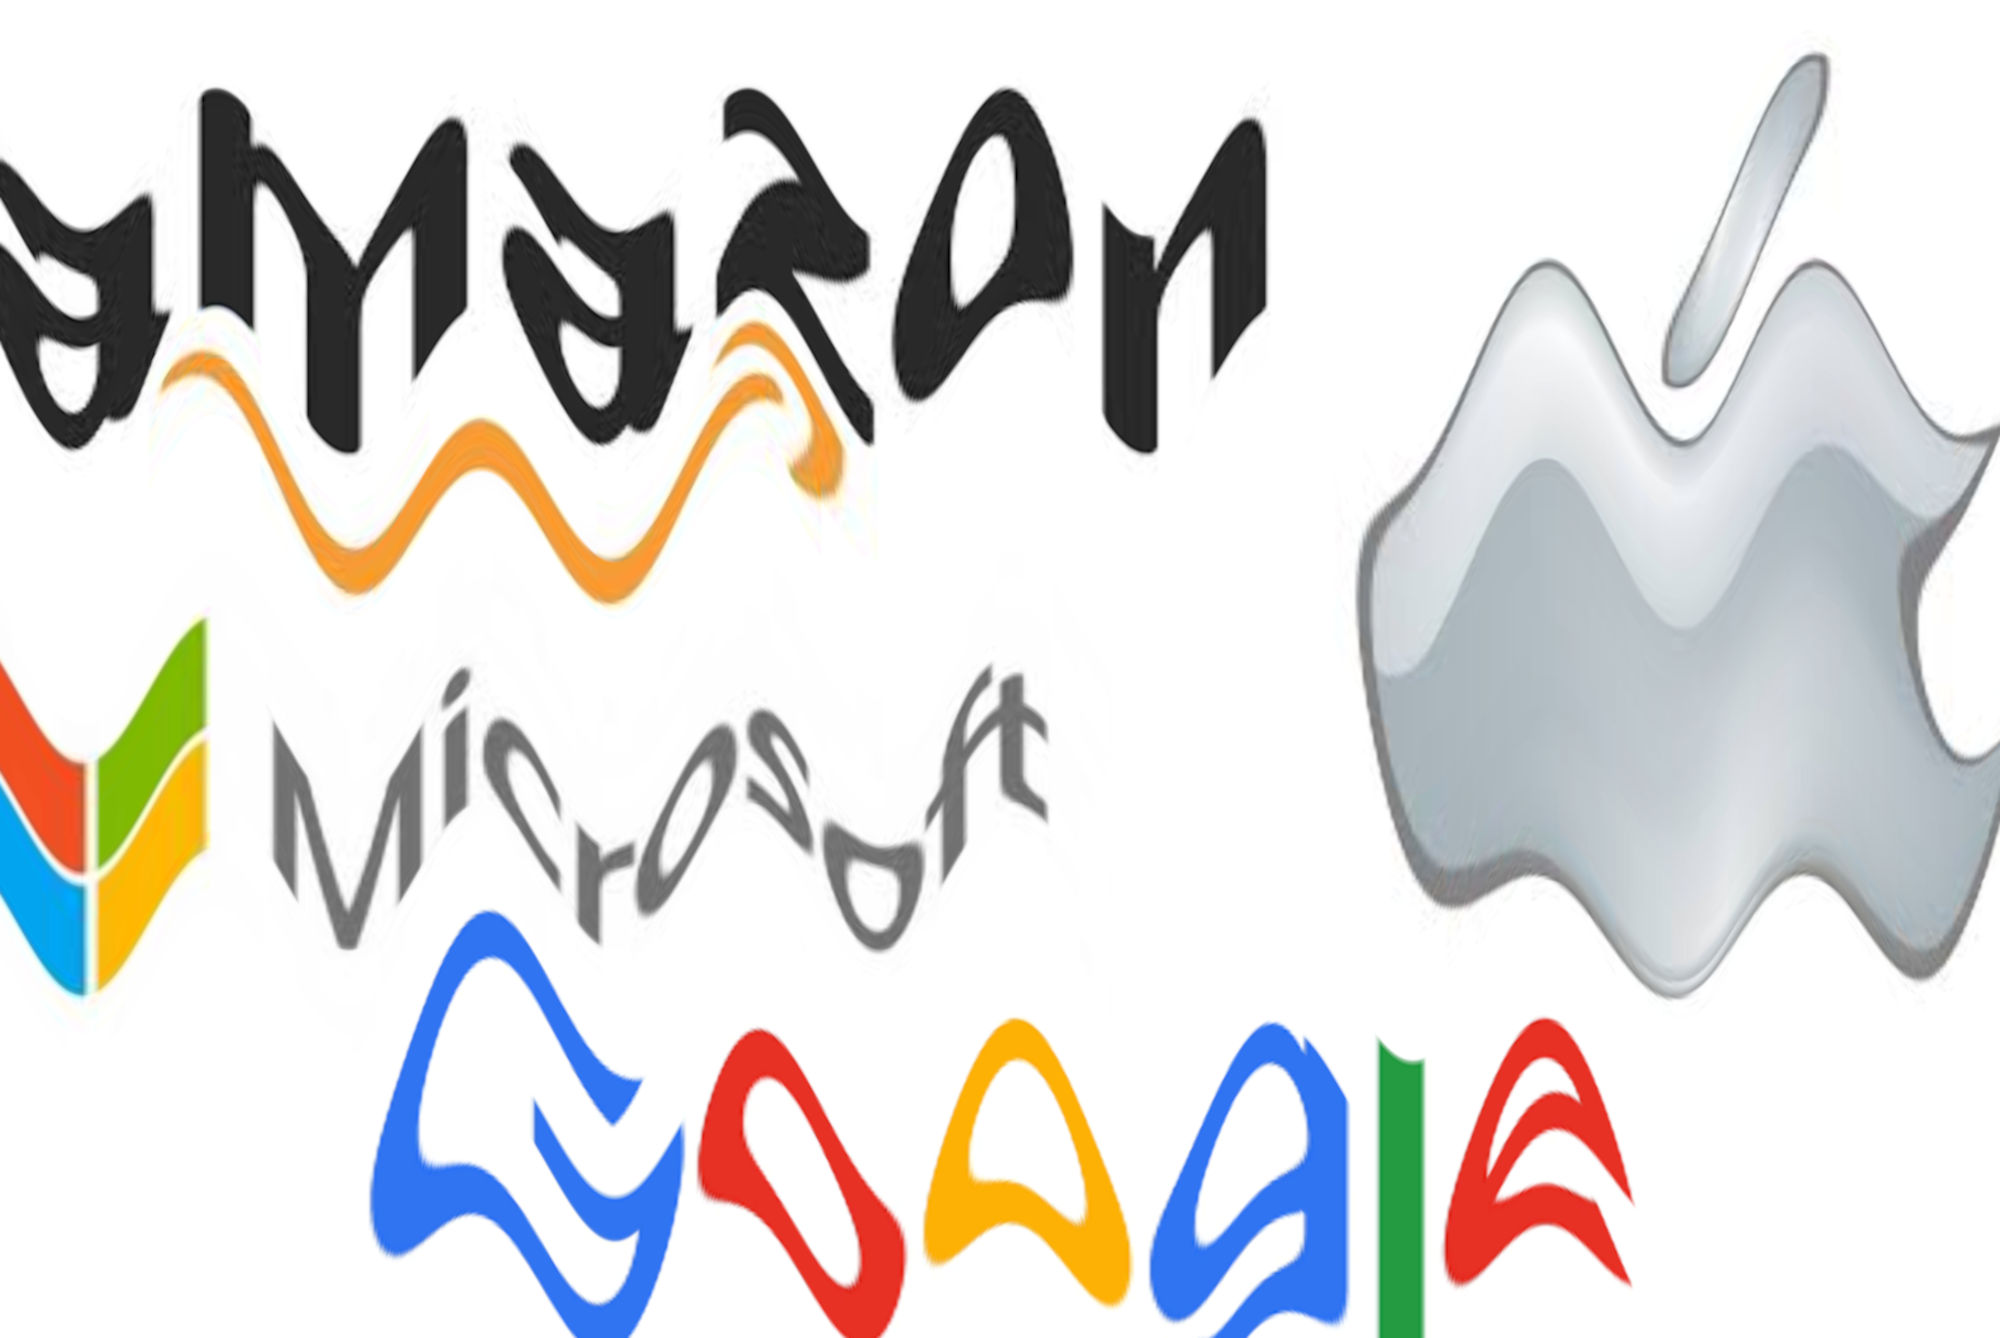 Distorted logos of Amazon, Apple, Microsoft and Google - symbolically de-googling